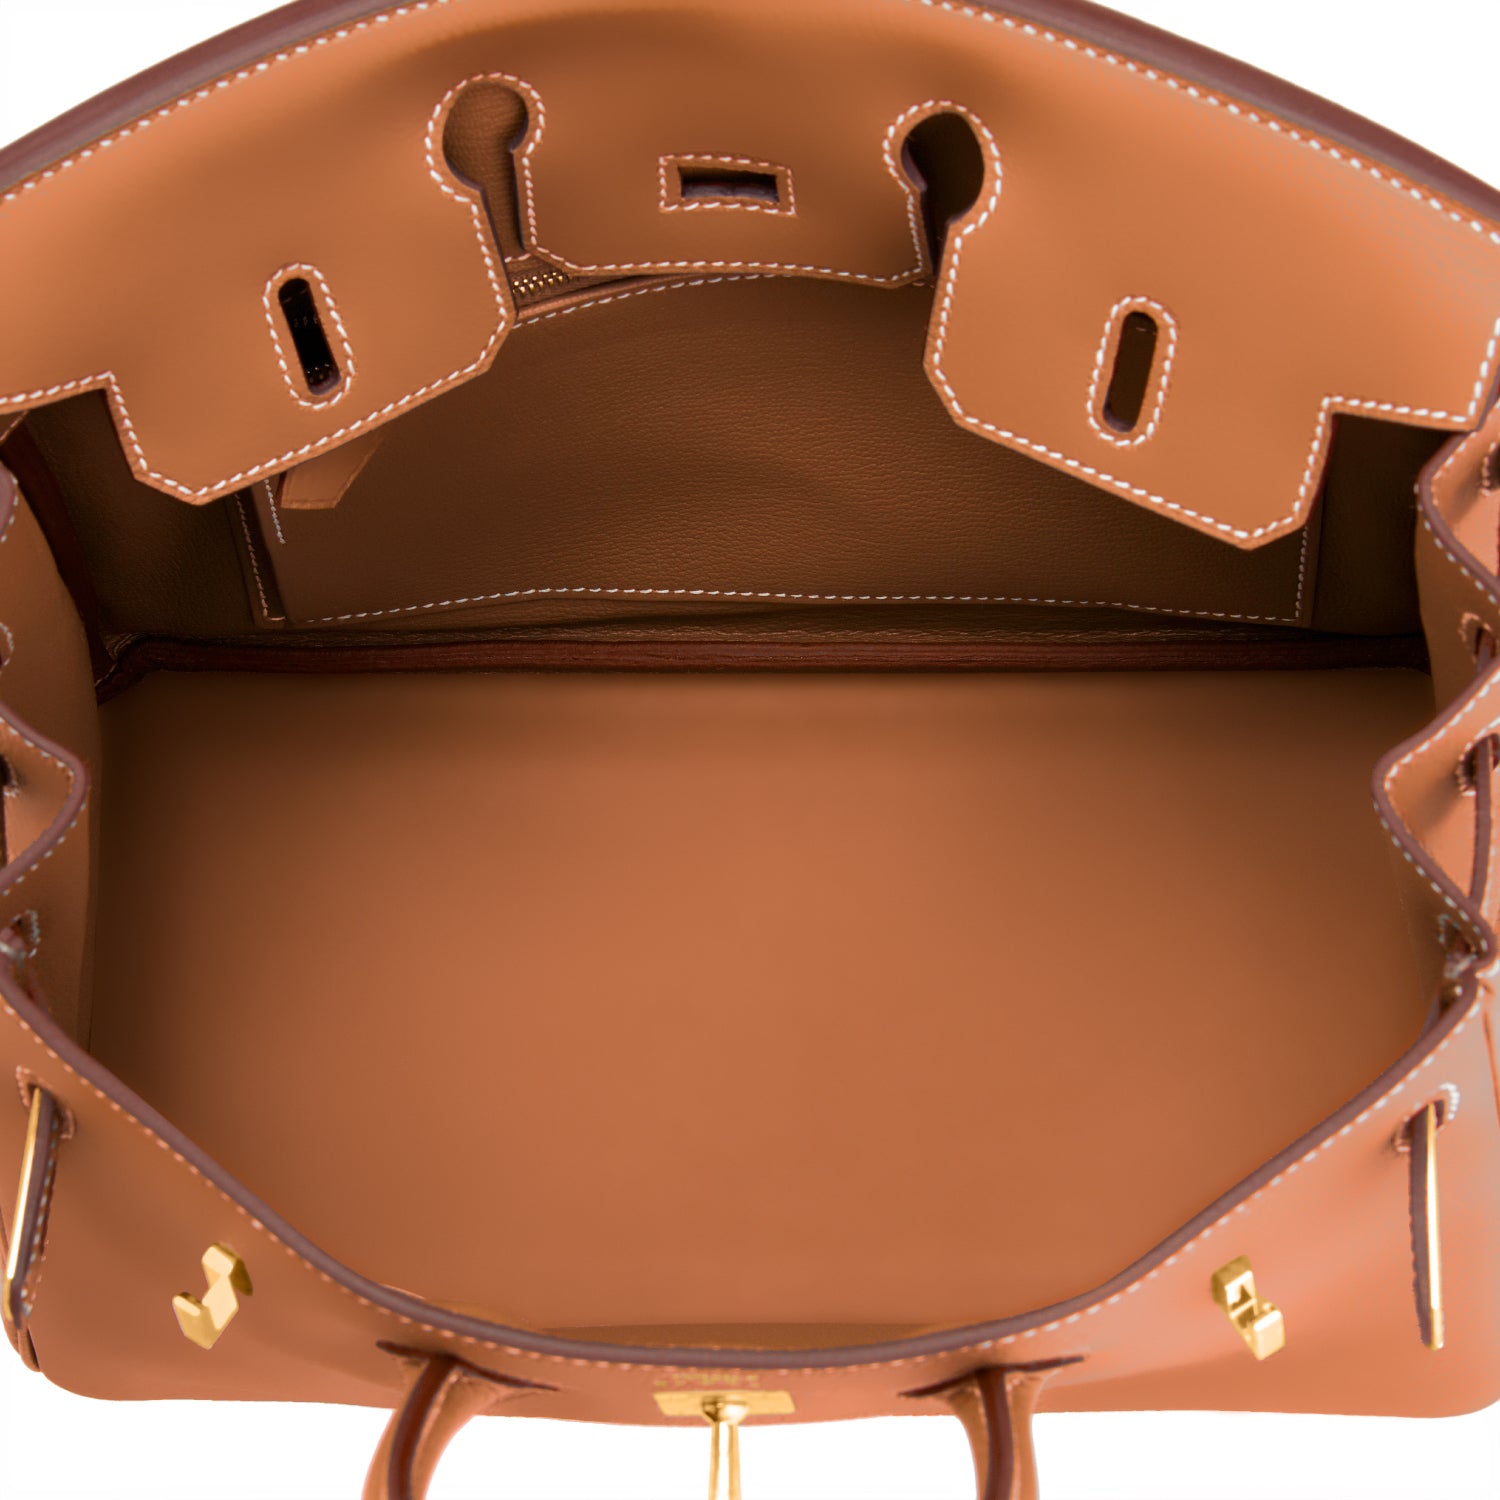 Hermes Birkin bag 25 Anemone Swift leather Gold hardware